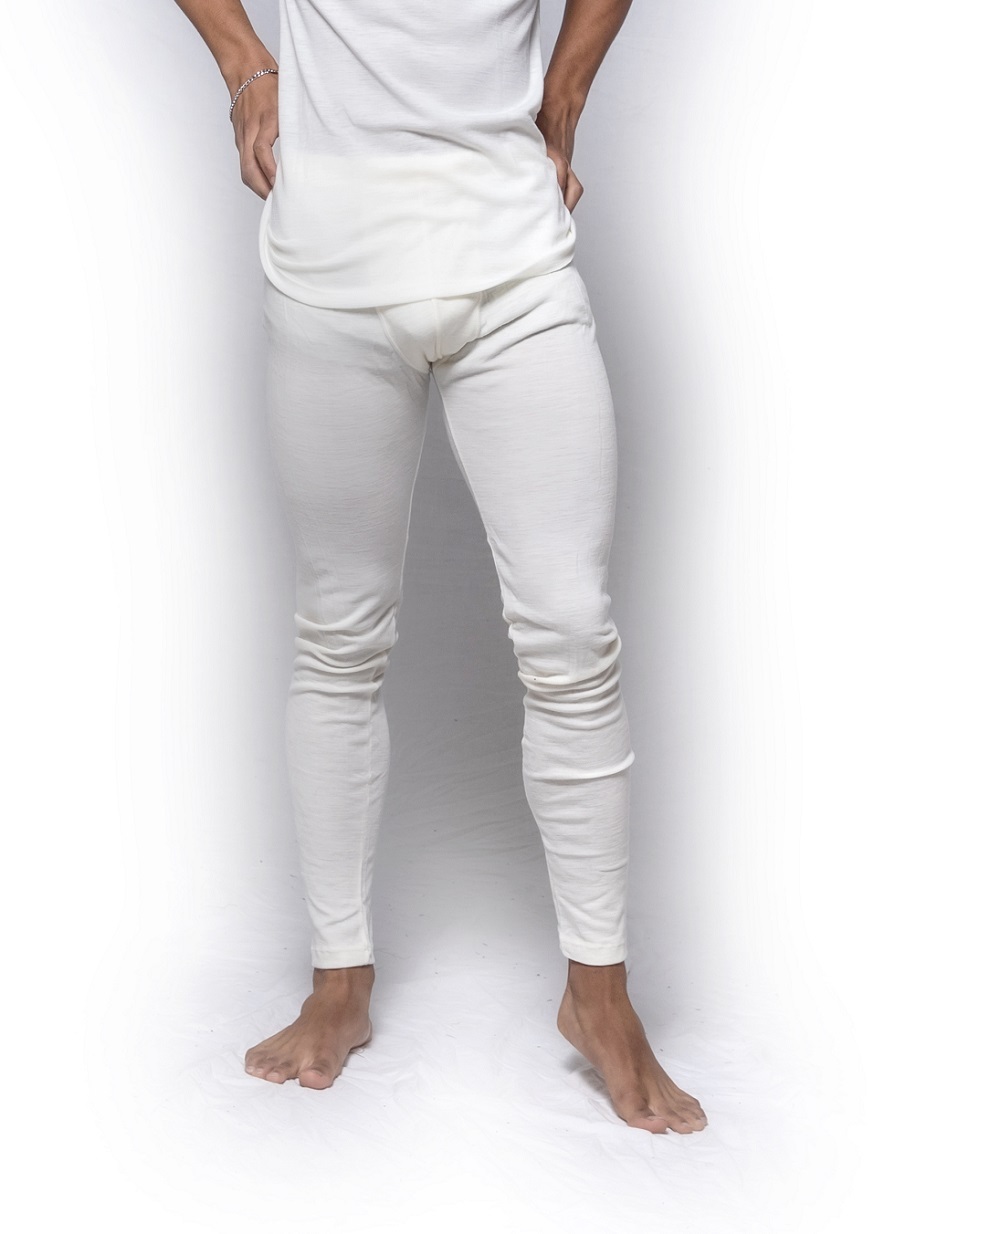 Mens Brandella Thermals Spencers Pure Wool 200gsm Long Johns Pants Beige